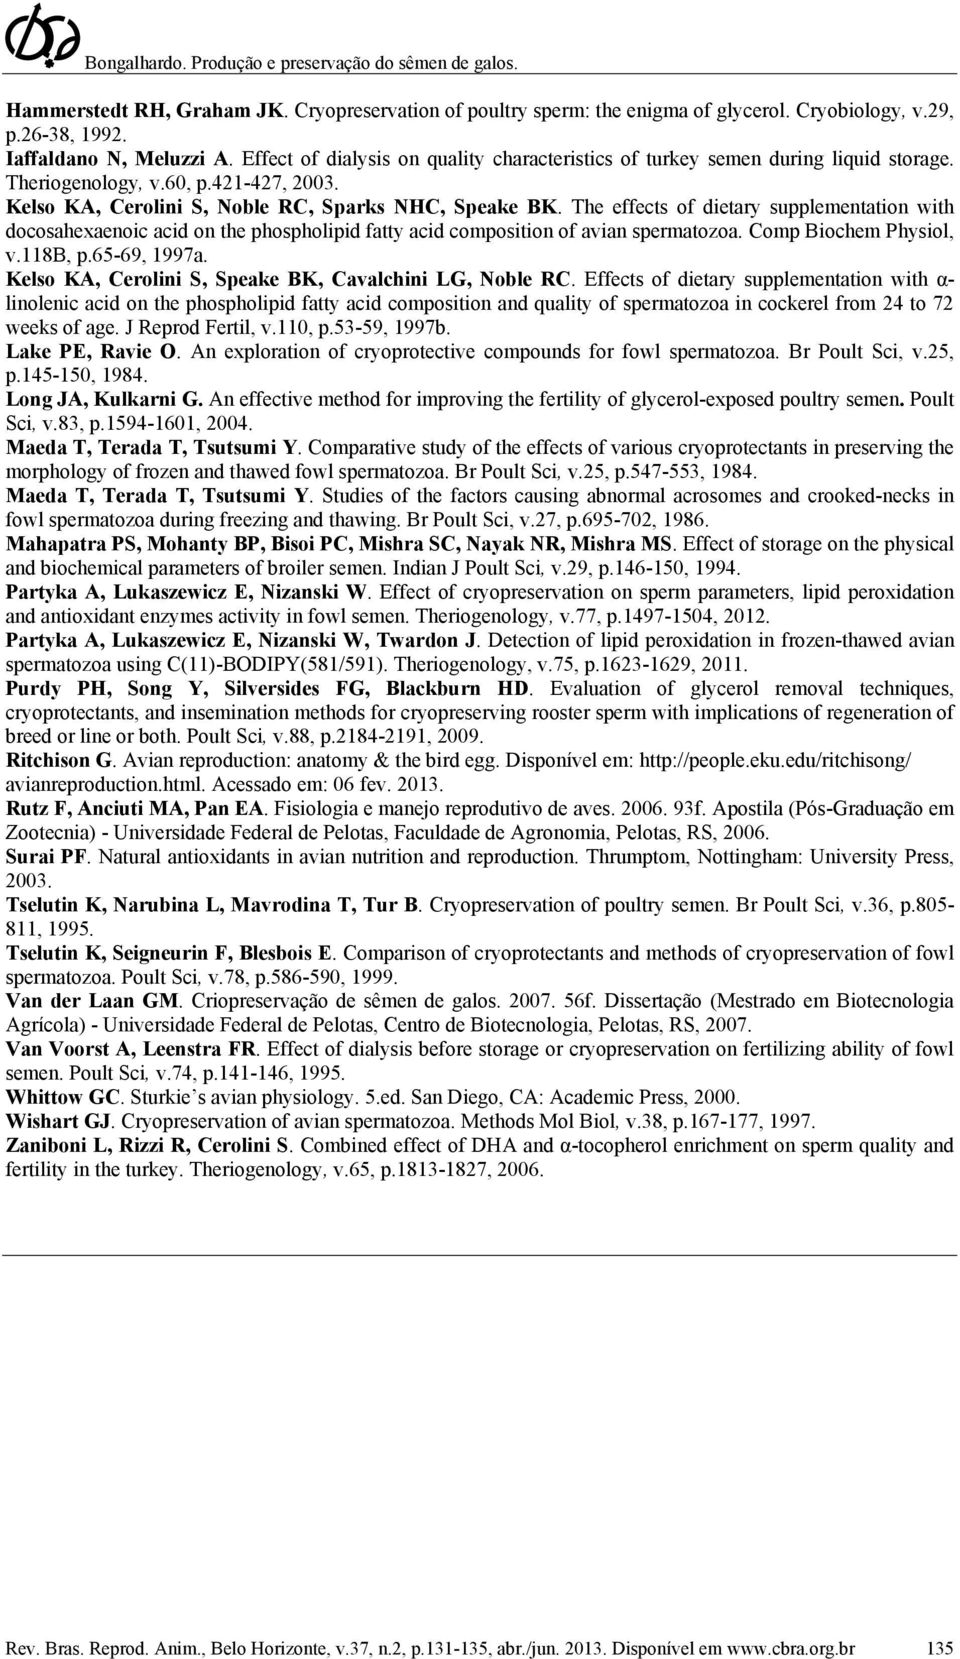 The effects of dietary supplementation with docosahexaenoic acid on the phospholipid fatty acid composition of avian spermatozoa. Comp Biochem Physiol, v.118b, p.65-69, 1997a.